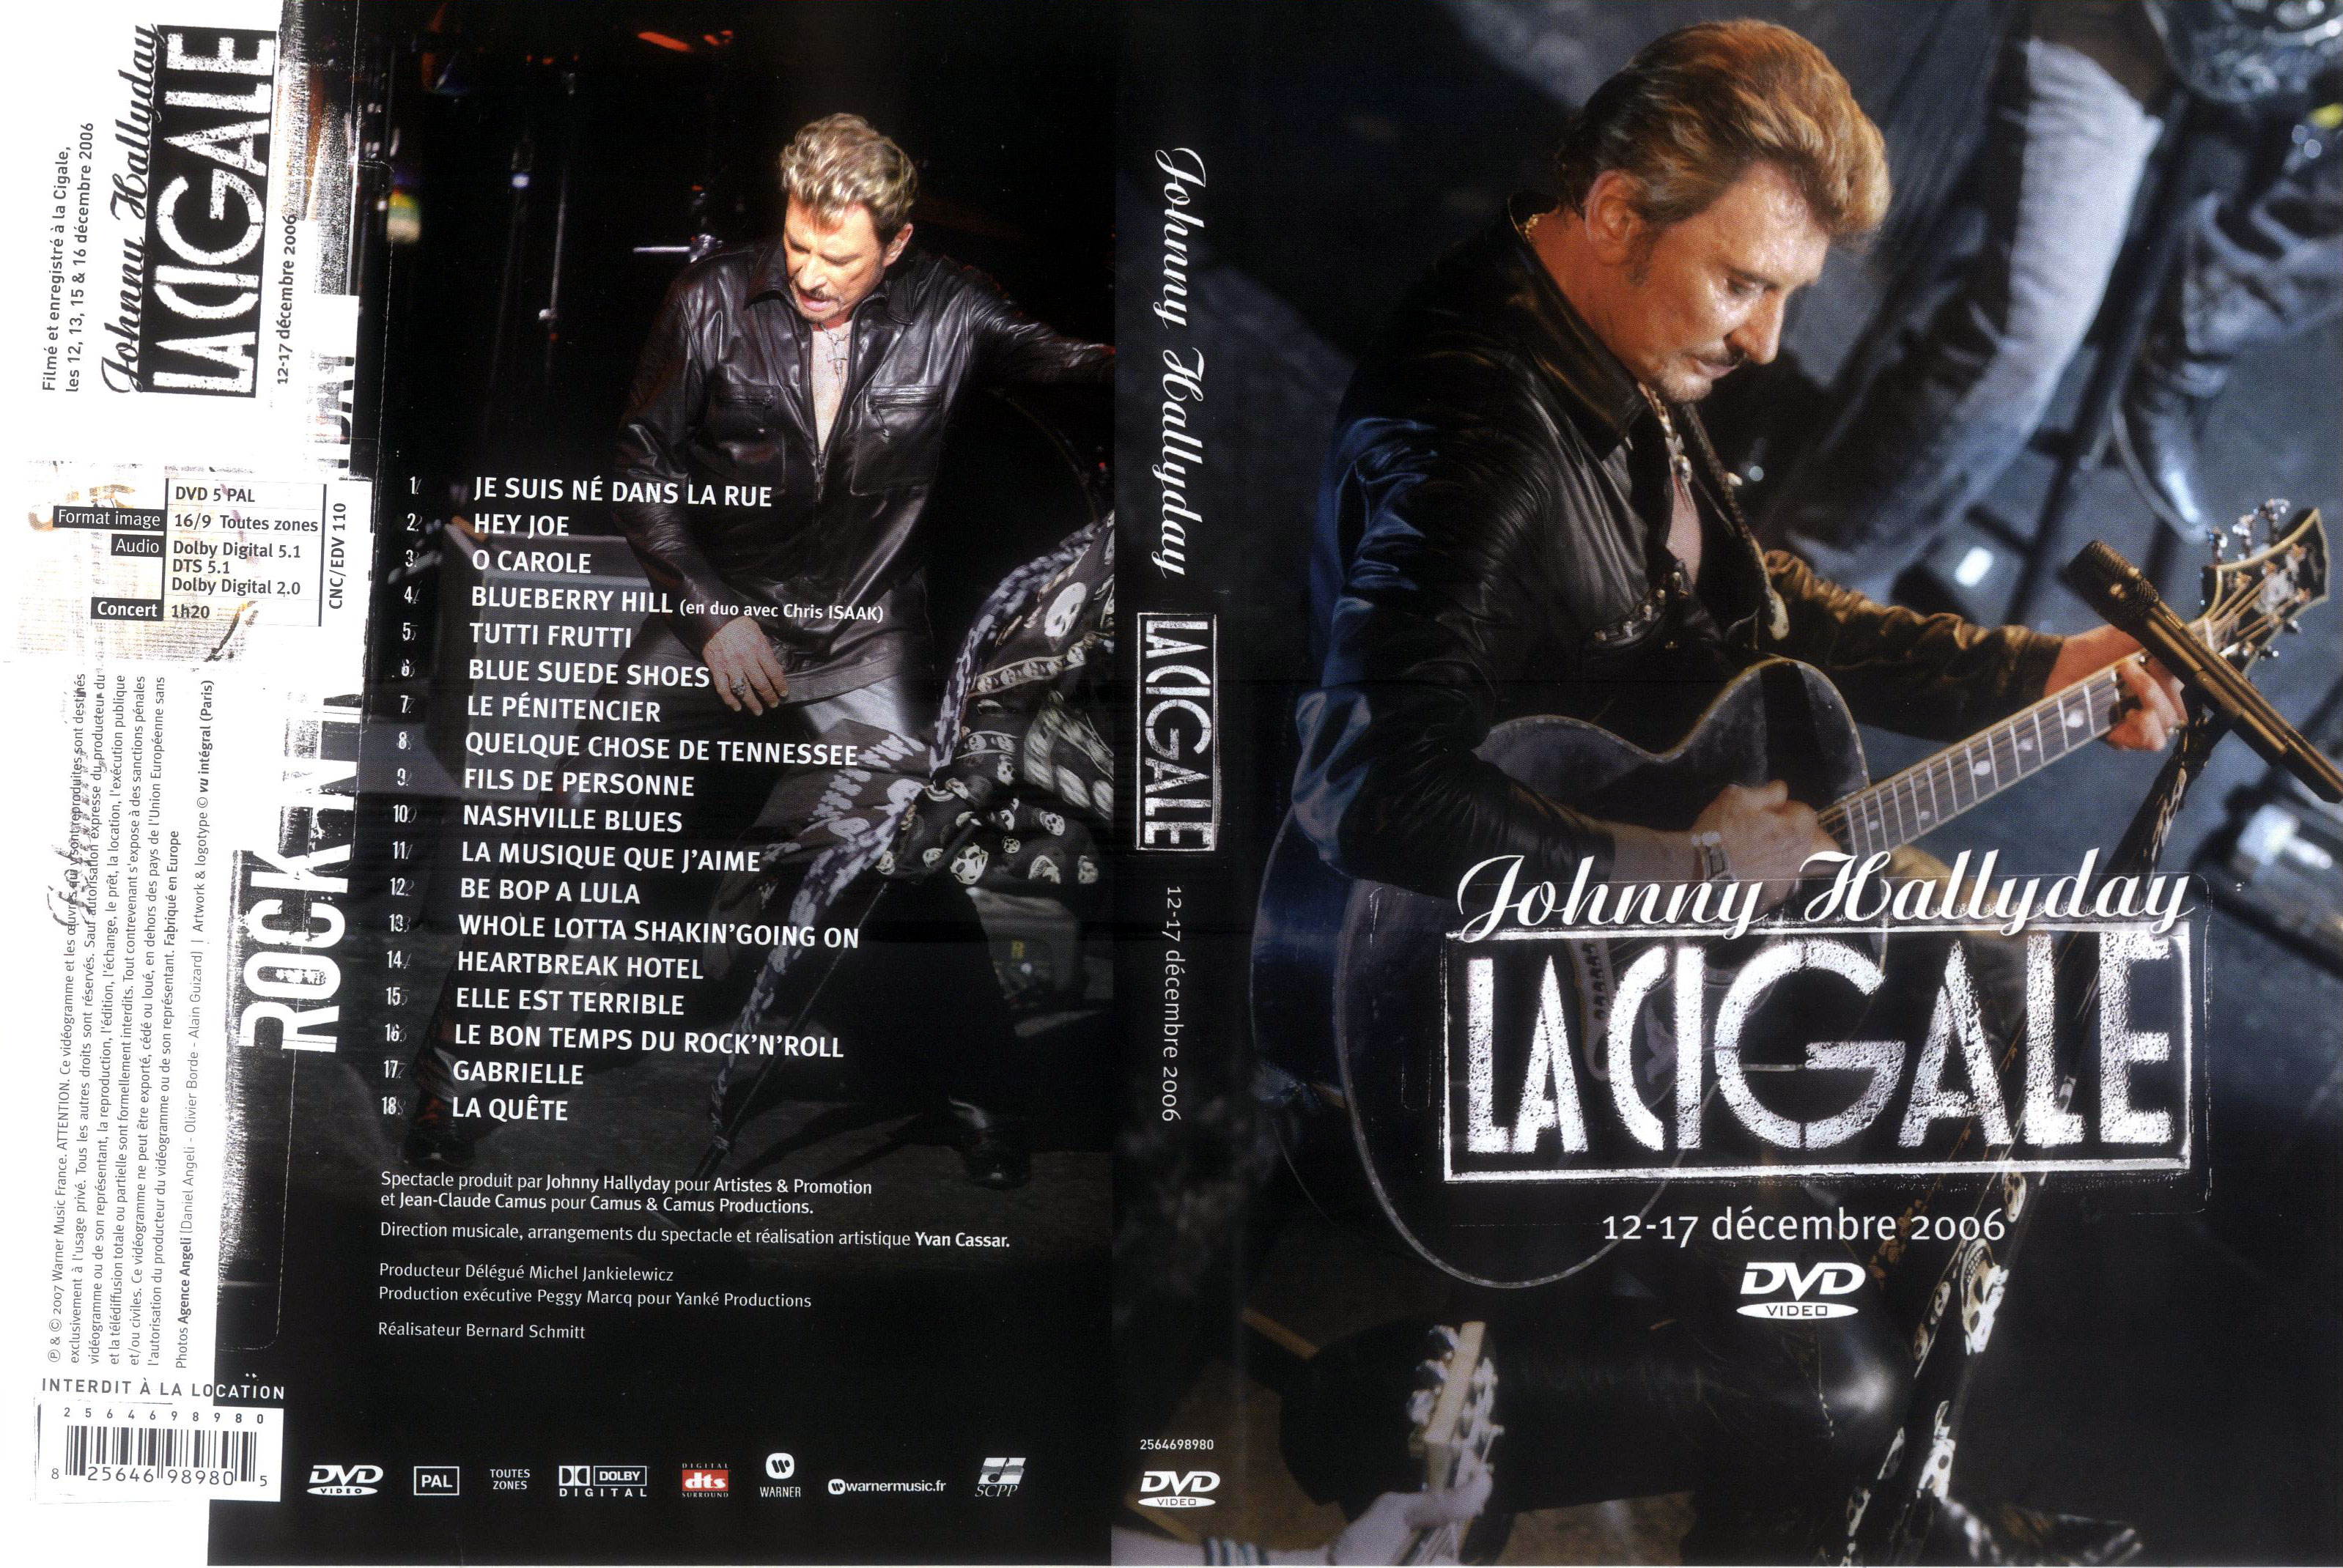 Jaquette DVD Johnny Hallyday La cigale 2006